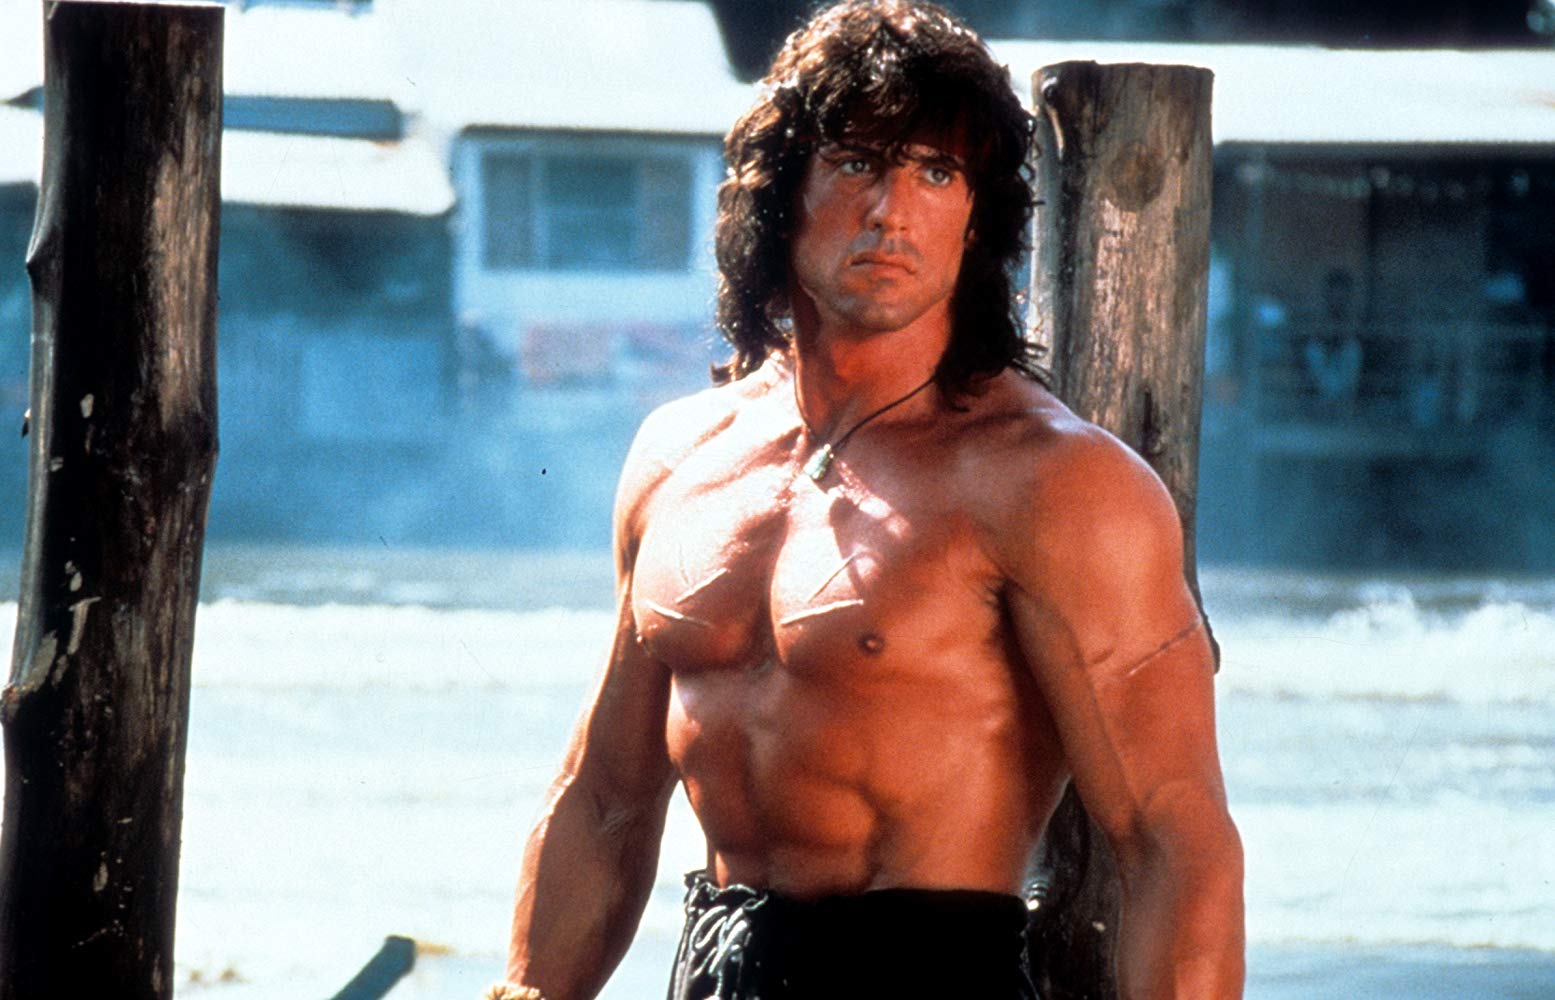 Rambo III – Wikipédia, a enciclopédia livre